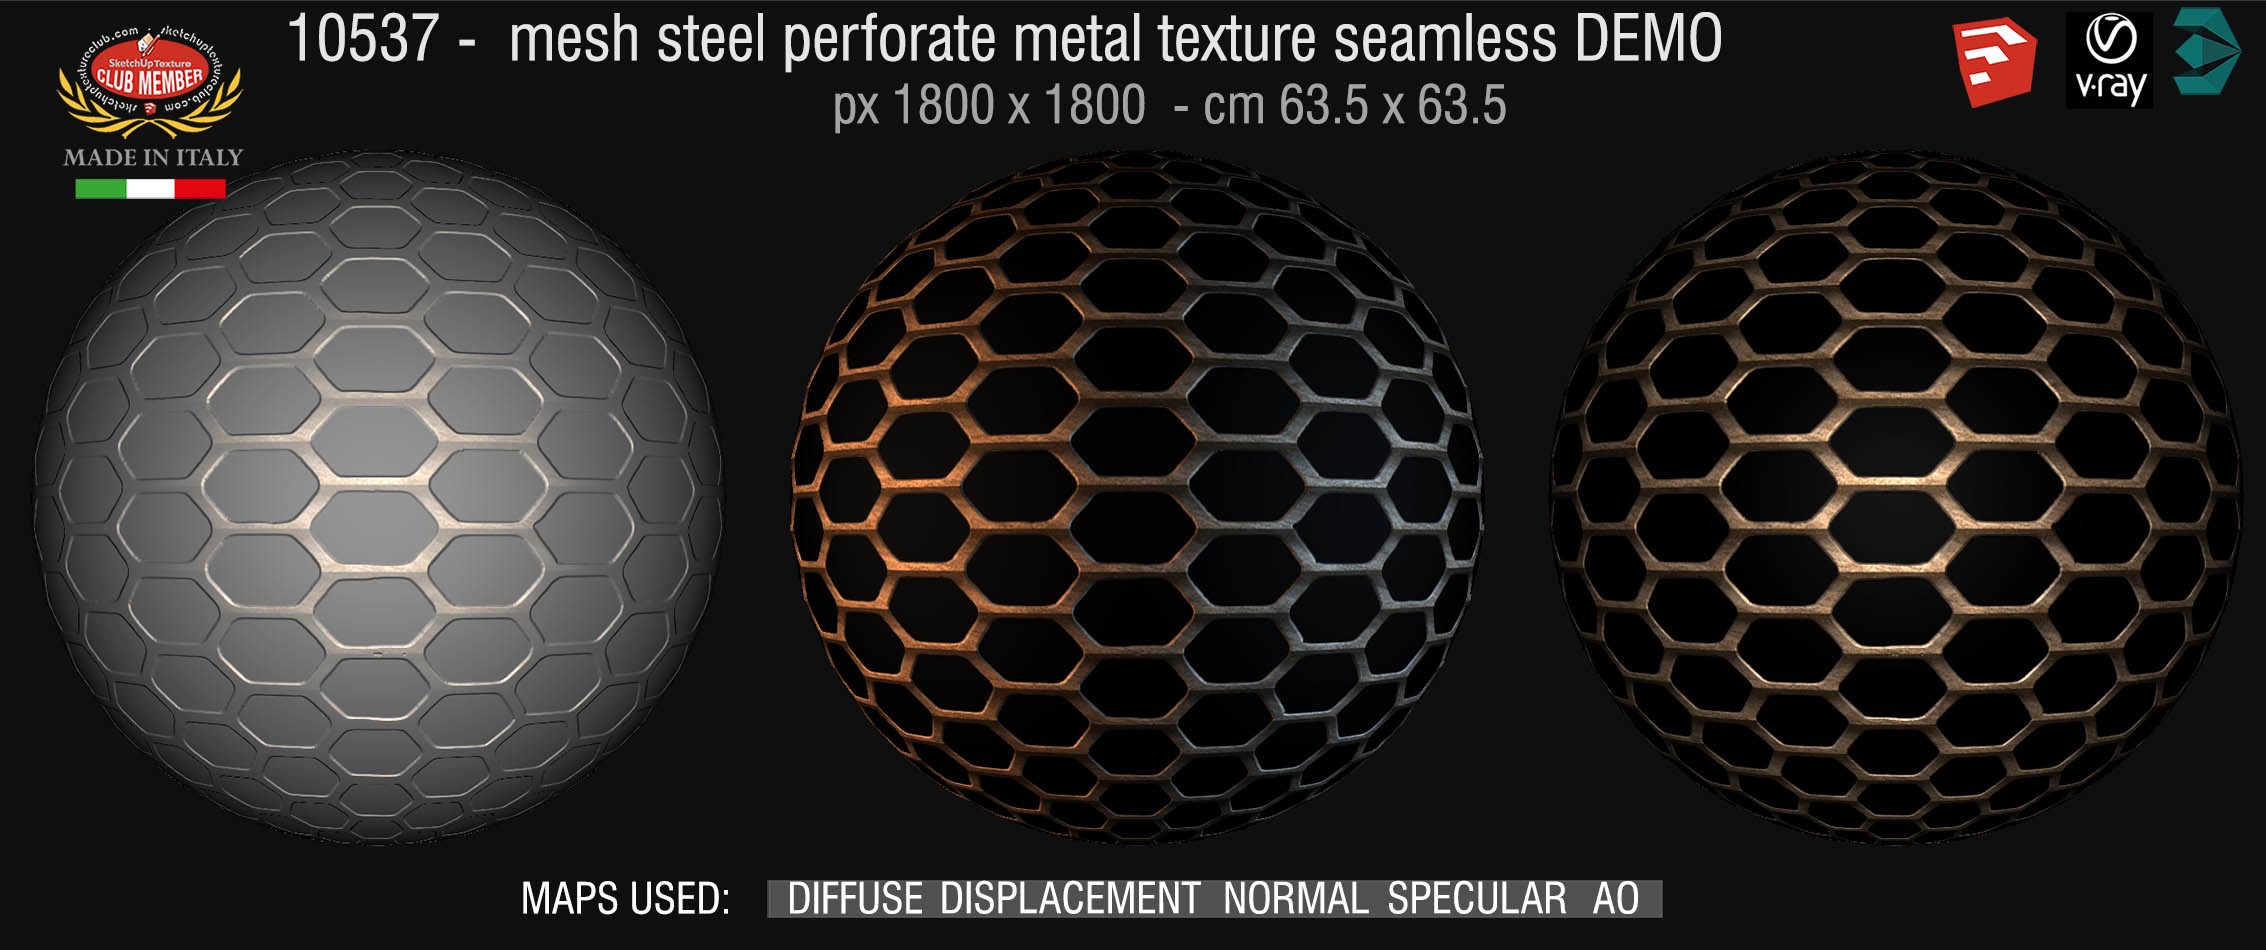 10537 HR Mesh steel perforate metal texture seamless + maps DEMO